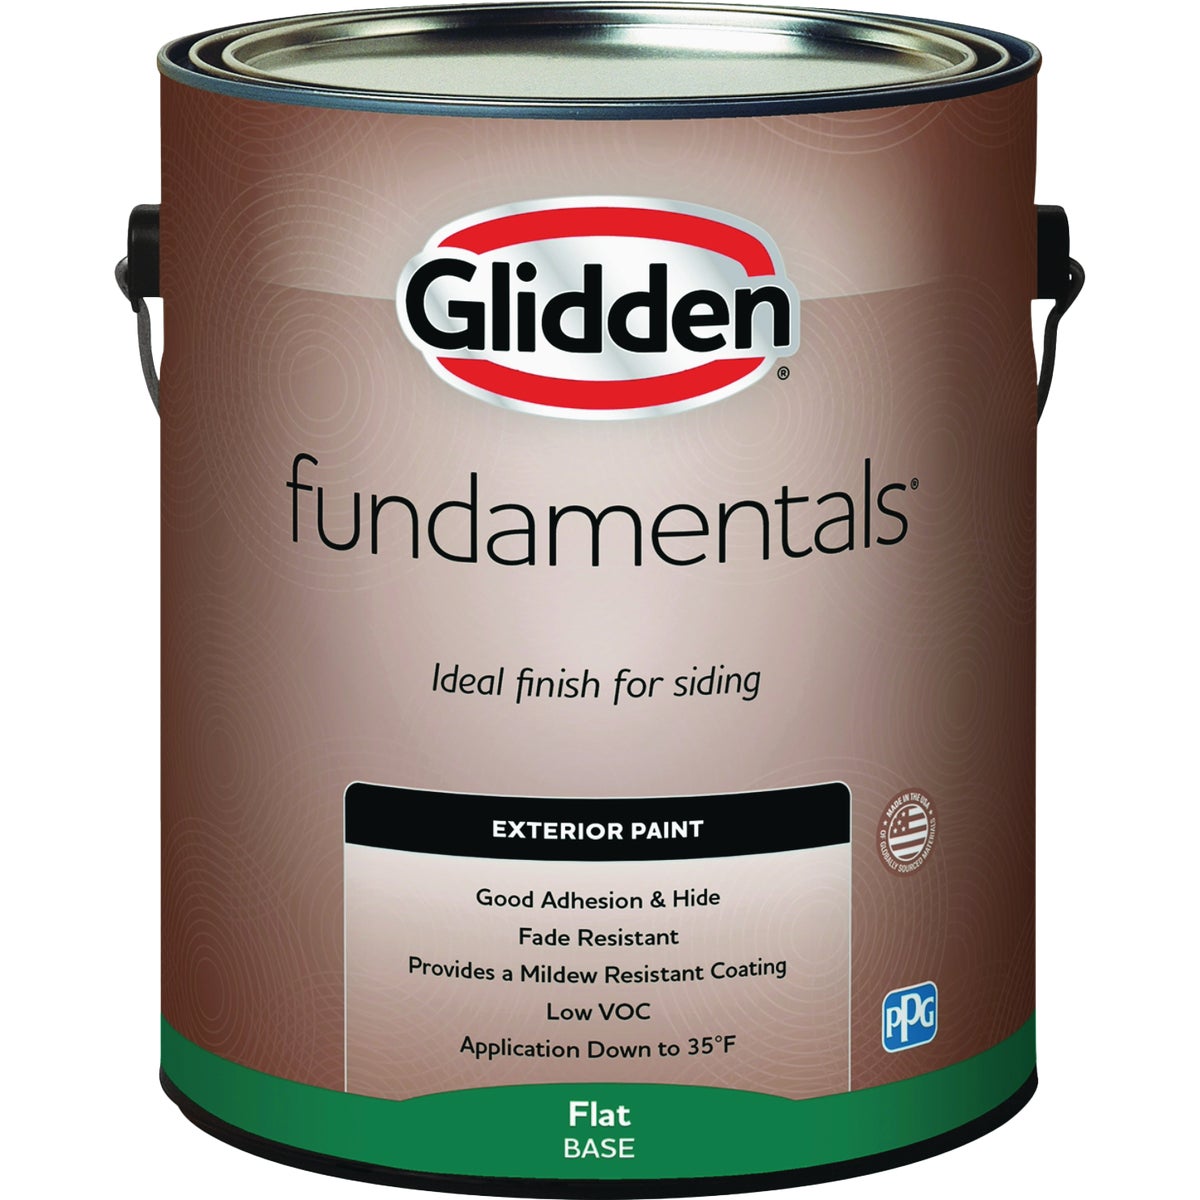 Glidden Fundamentals Exterior Paint Flat Midtone Base Gallon